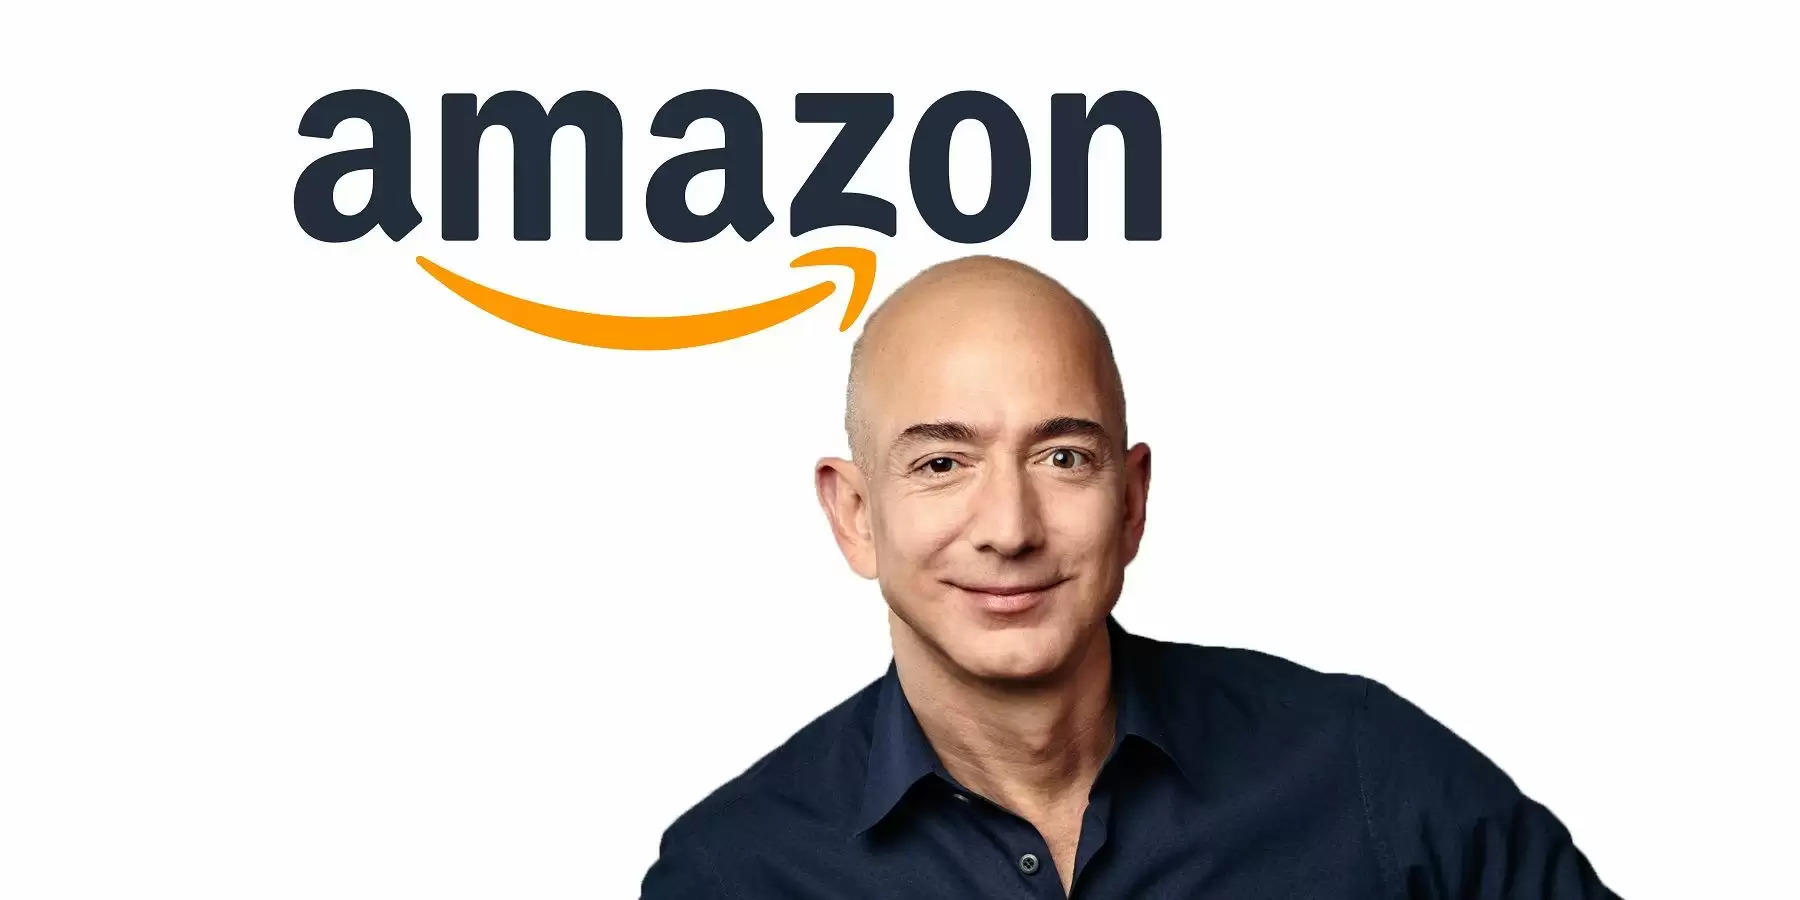 jeff Bezos